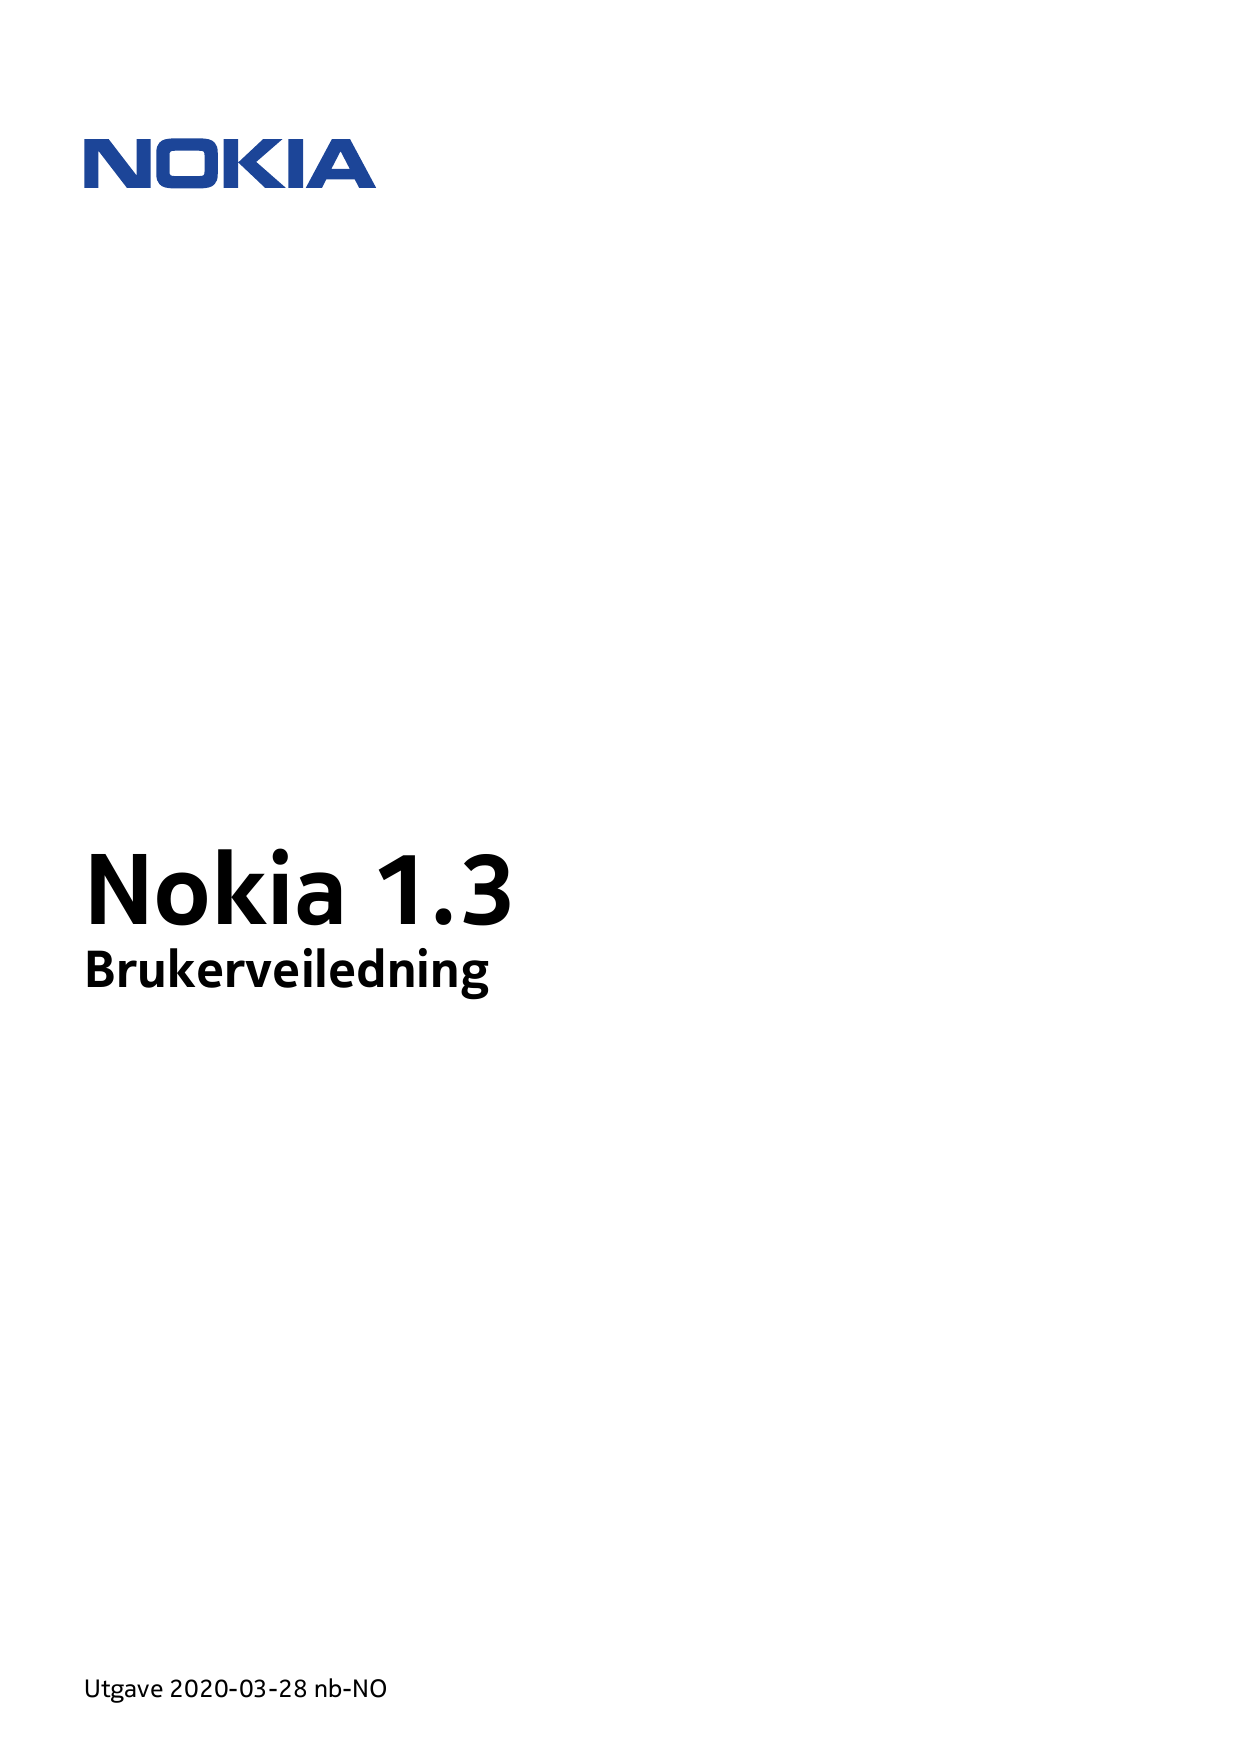 Nokia 1.3BrukerveiledningUtgave 2020-03-28 nb-NO